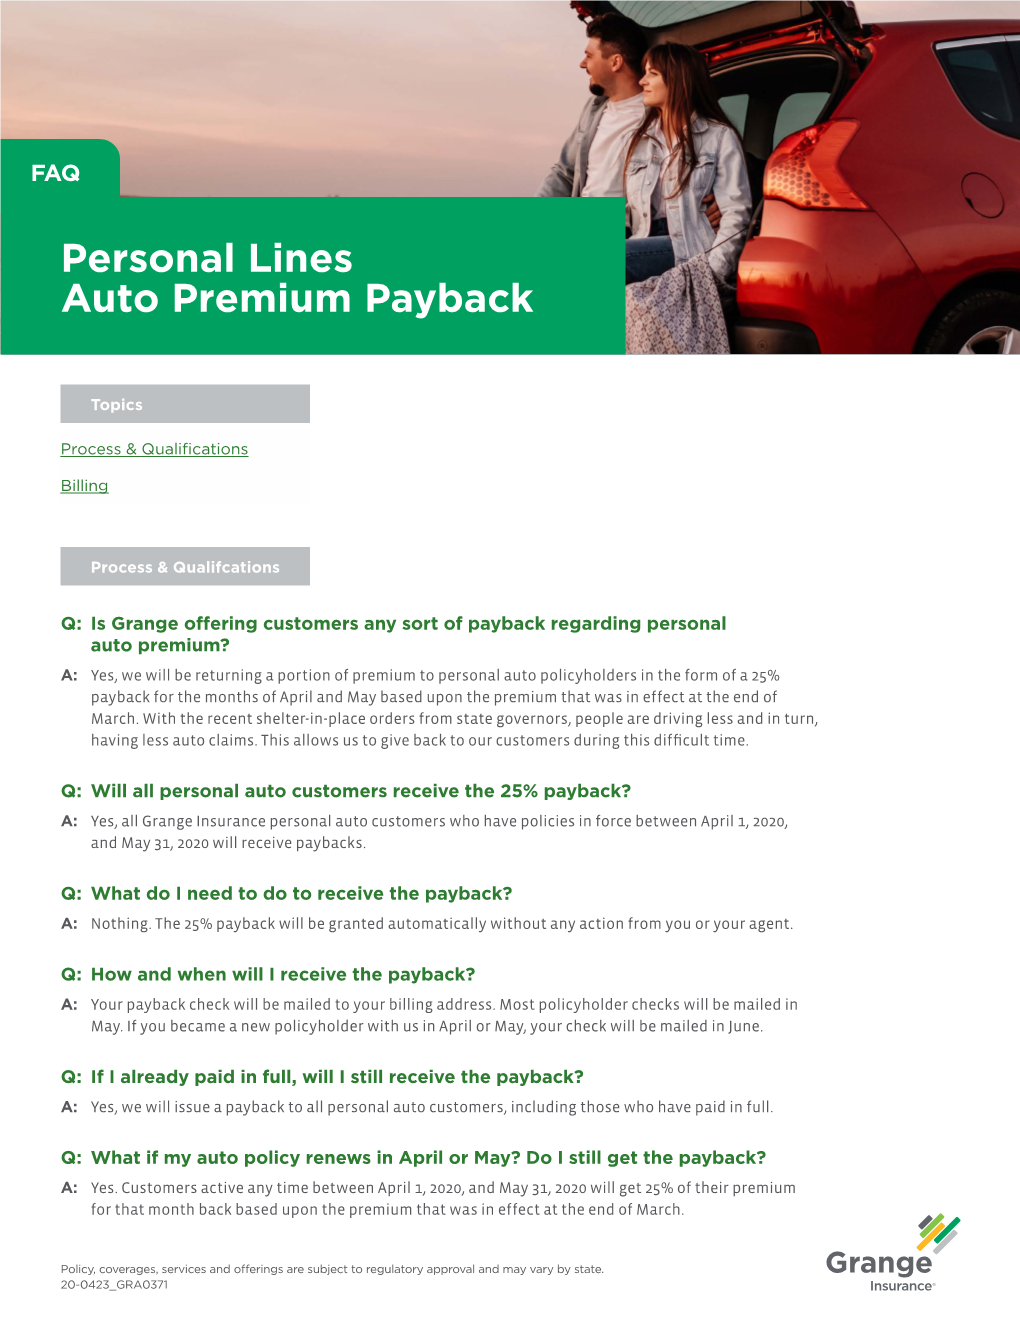 Personal Lines Auto Premium Payback